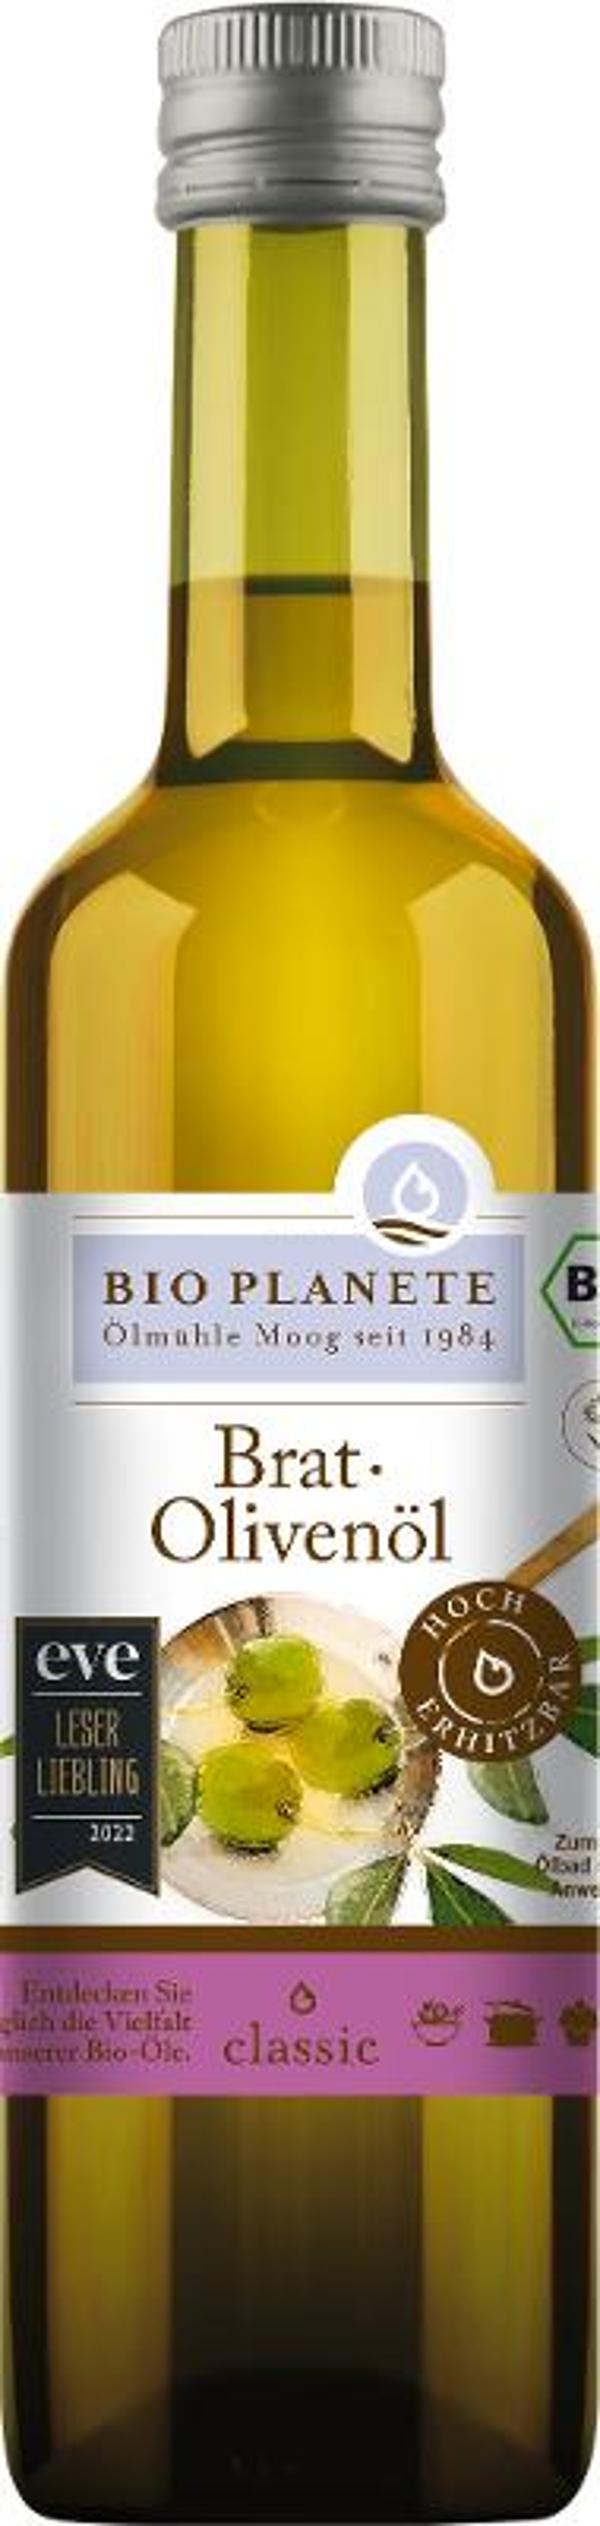 Produktfoto zu Bio Planete Brat Olivenöl - 0,5l